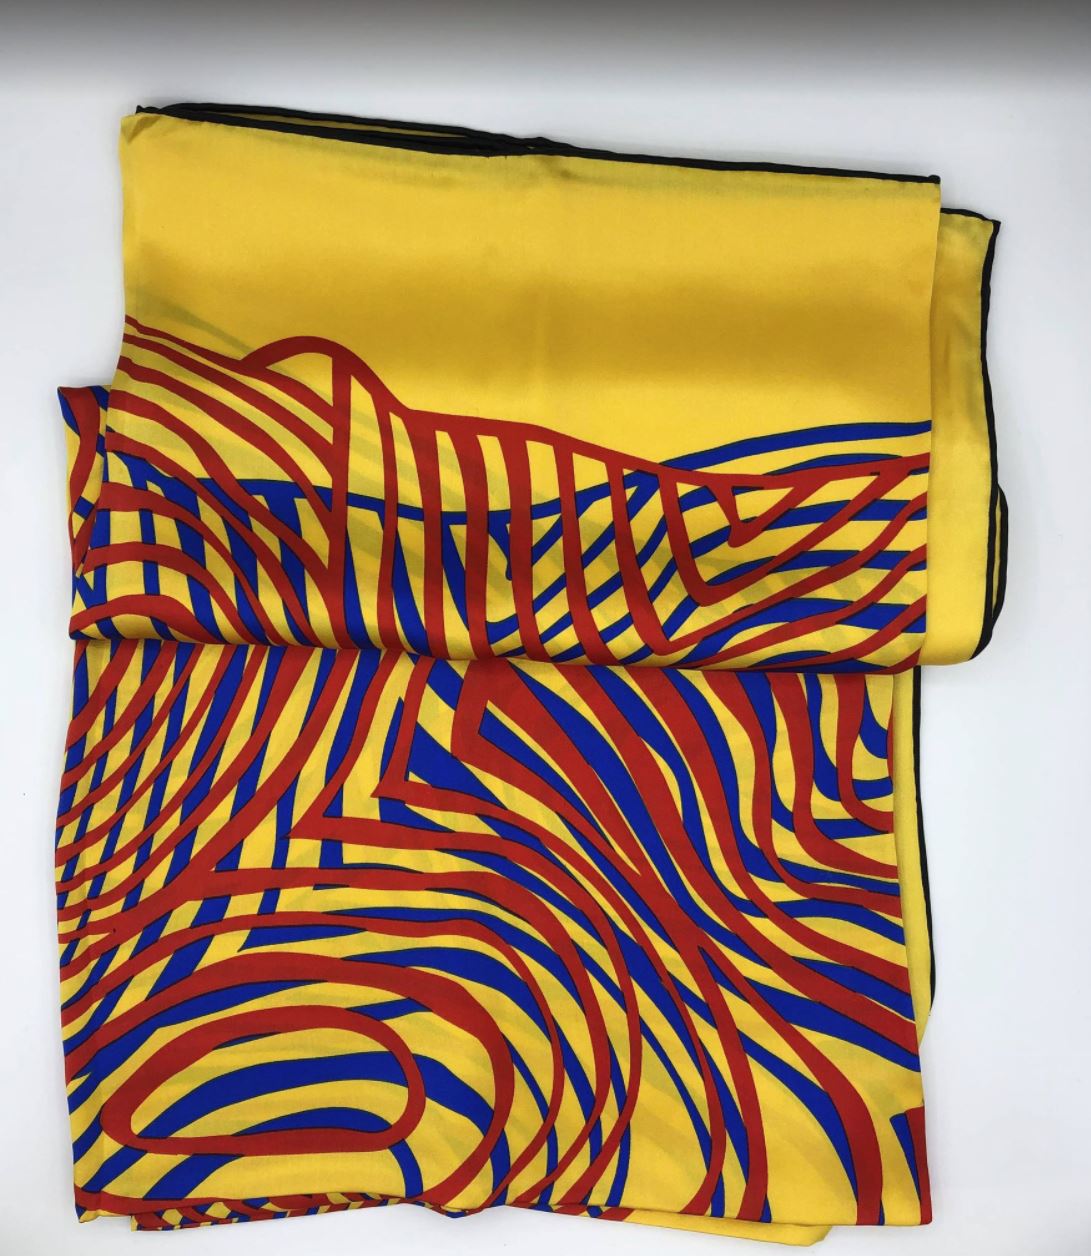 Large Fashion Silk Scarf  For Women / Yellow, Red, Blue/ 41.5" x 41.5", 16 mm / 100% Silk Satin / Gift Idea - 0